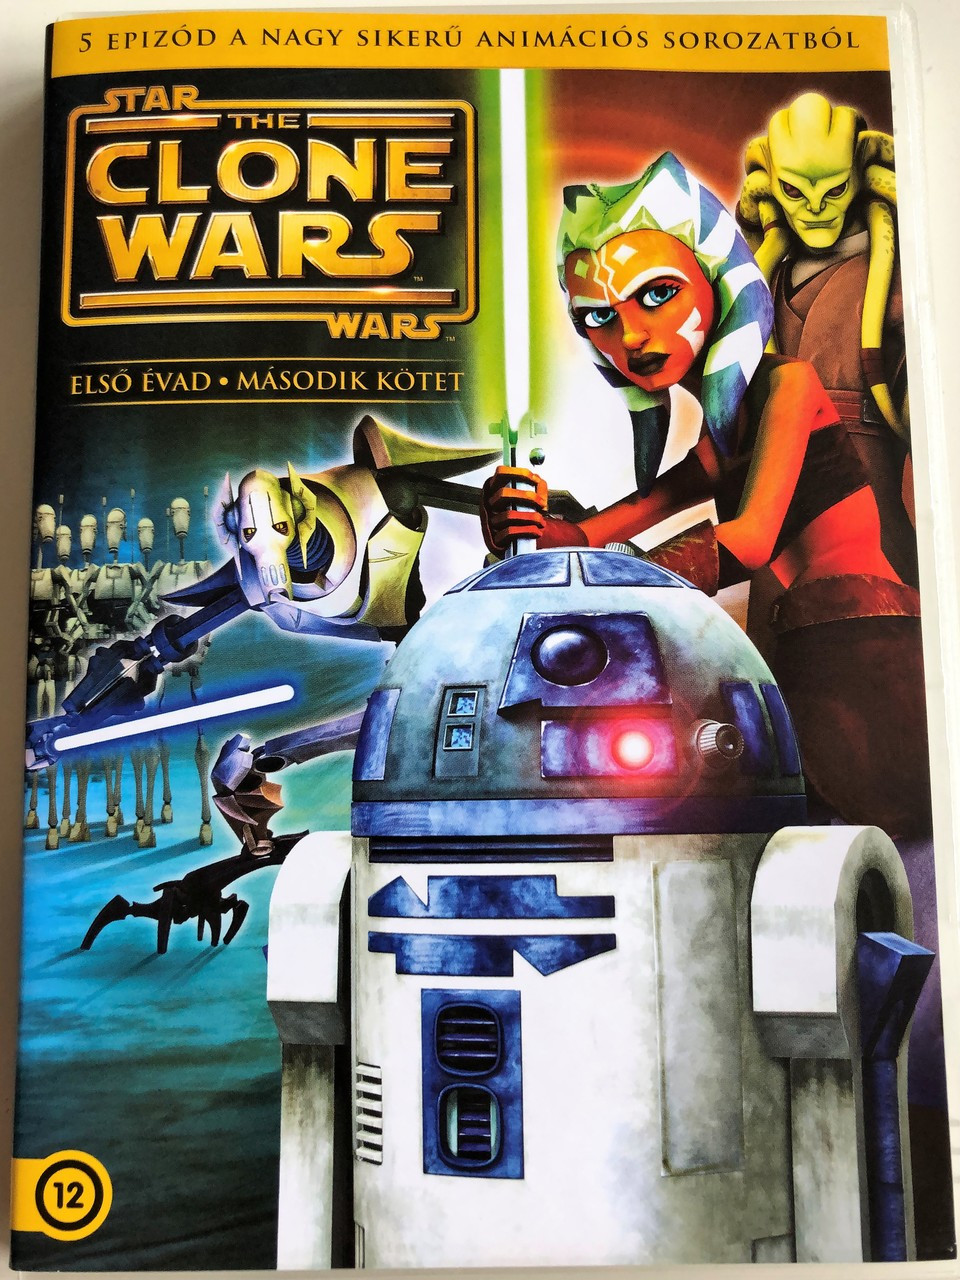 Star Wars The Clone Wars Season 1 - Volume 2 DVD 2008 Star Wars: A klónok  háborúja - Első évad - Masodik kötet / Animated TV Series / Created by  George Lucas / 5 episodes on DVD - bibleinmylanguage